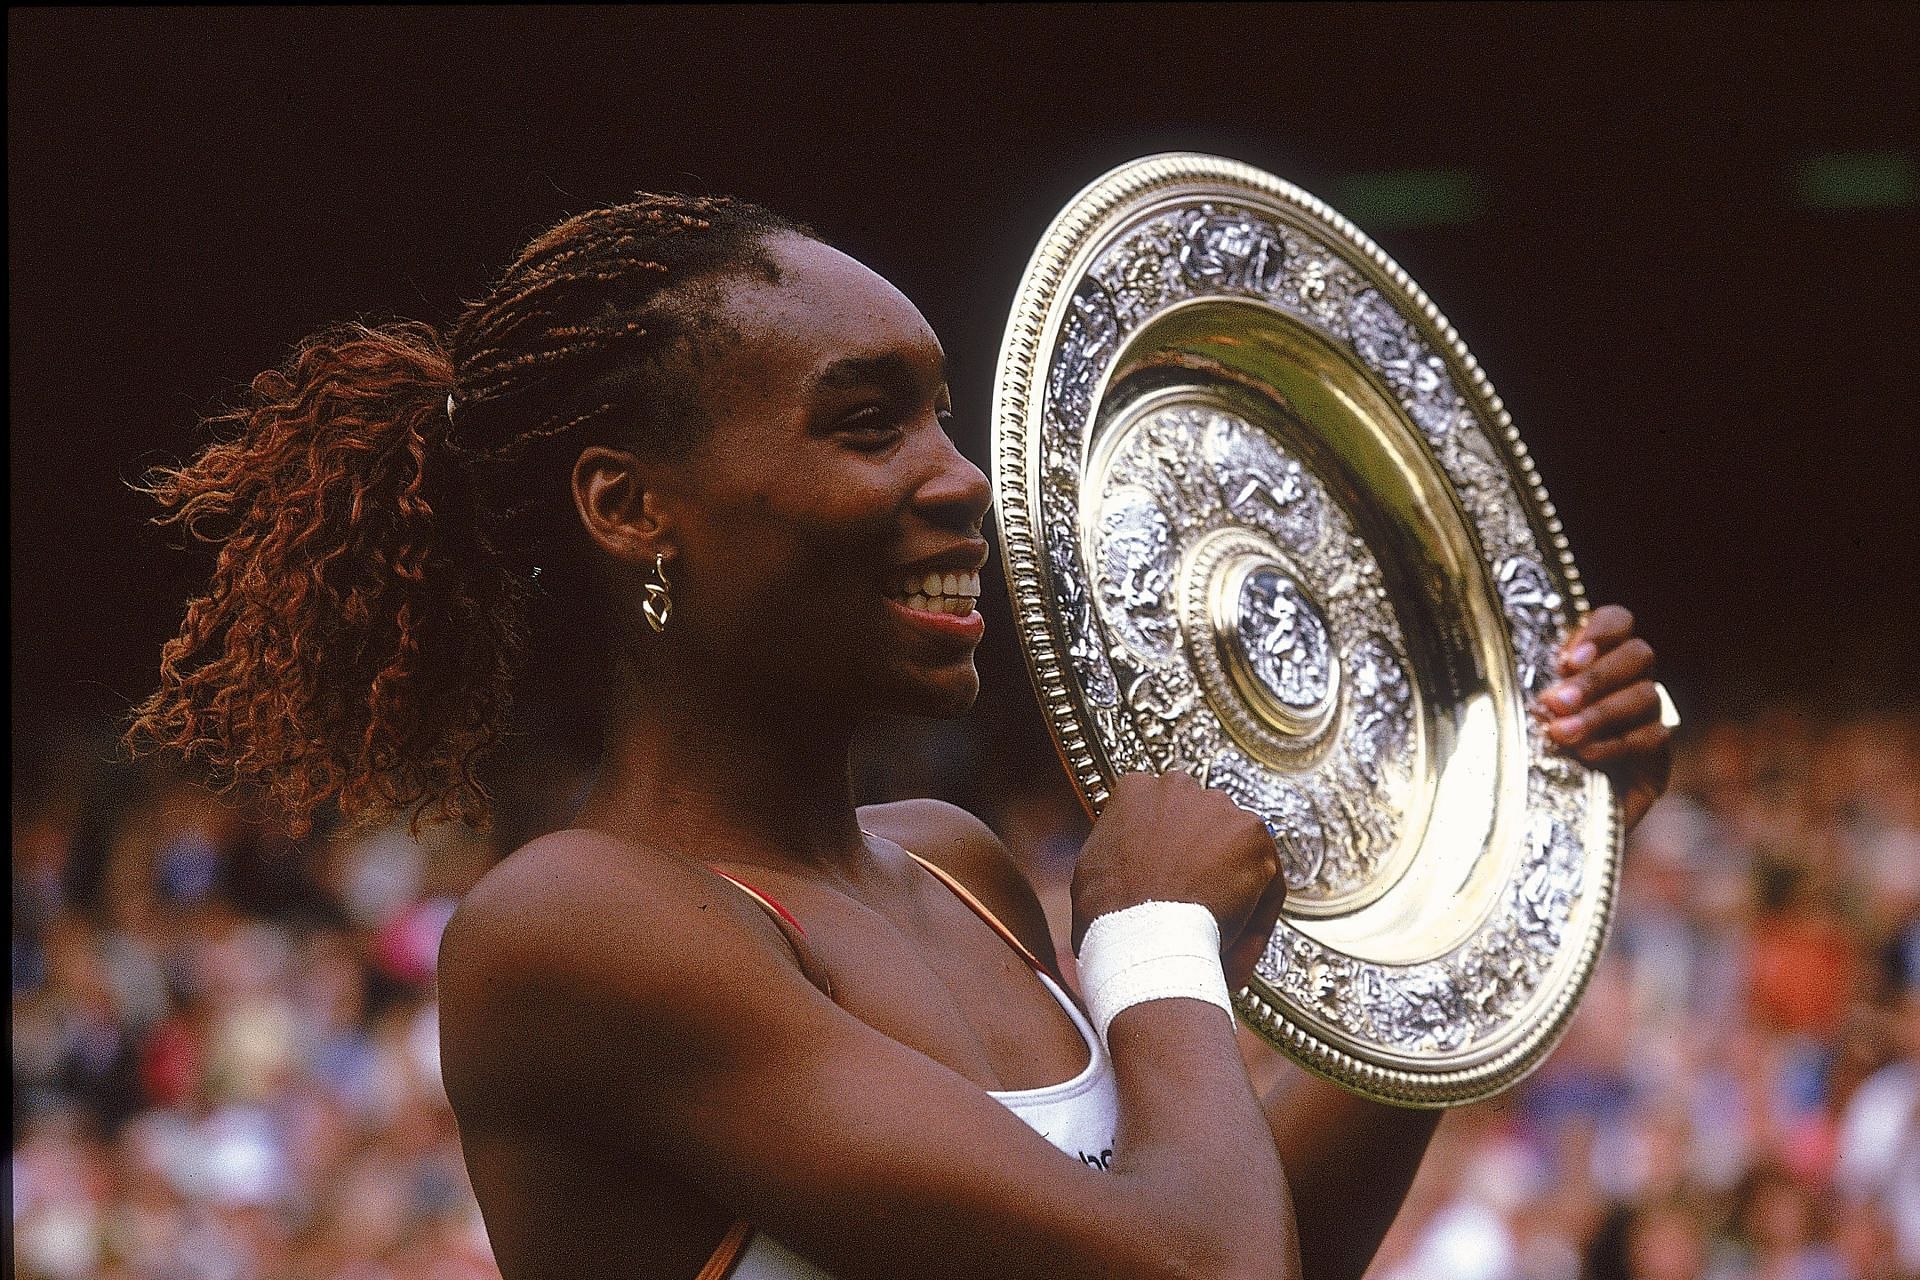 A 20-year-old Venus Williams won Wimbledon in 2000